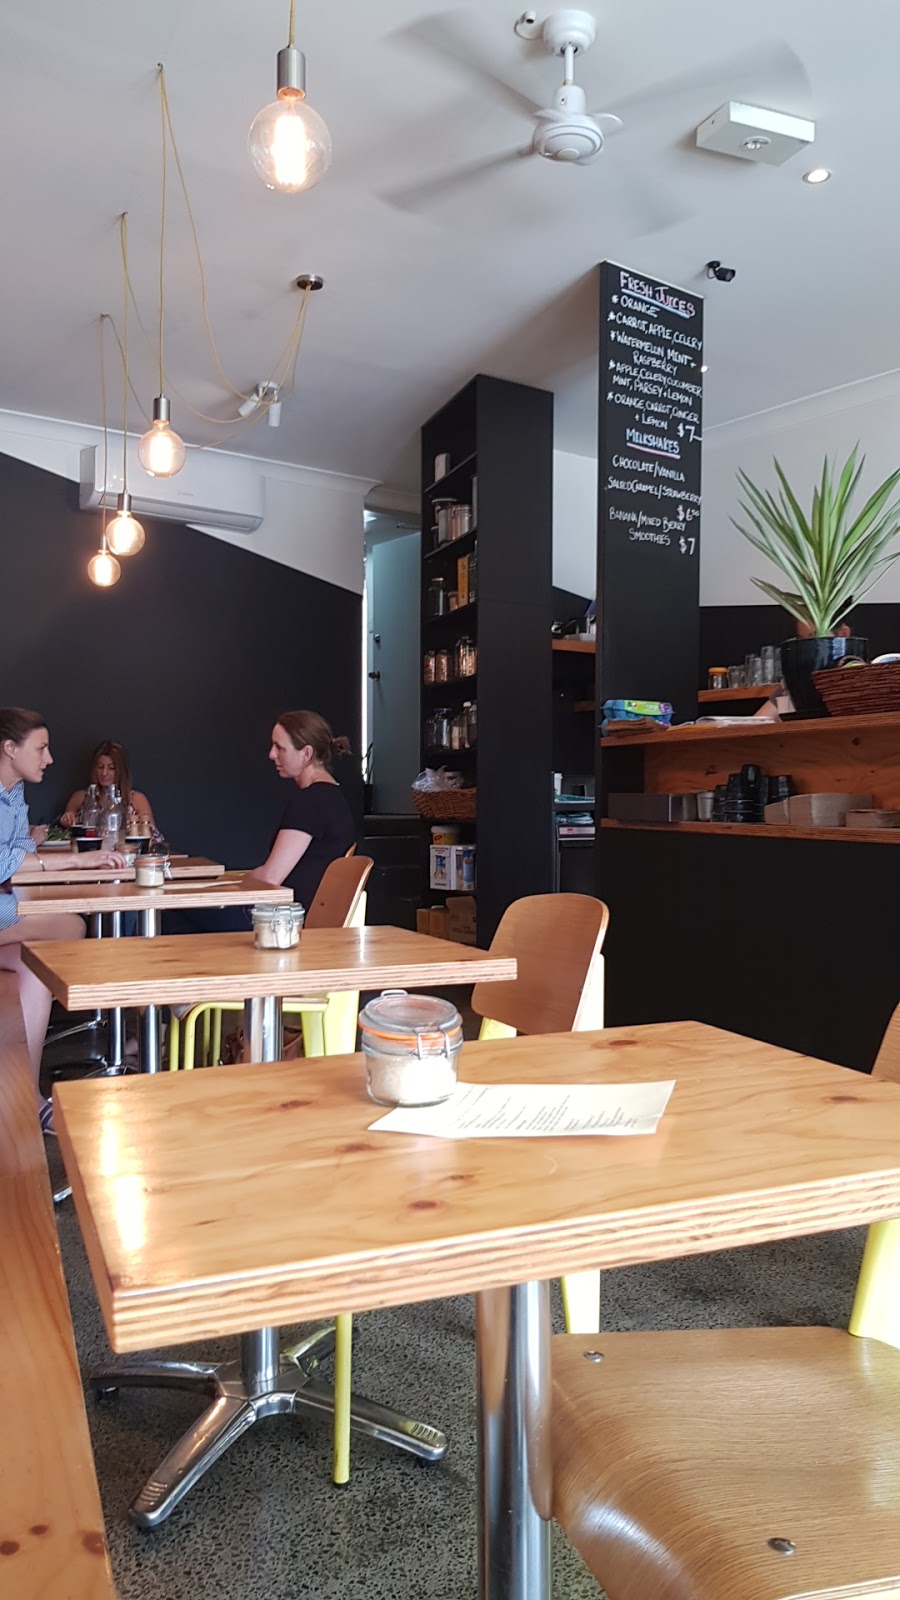 Shaw St Espresso | cafe | 15 Shaw St, Bexley North NSW 2207, Australia | 0280846571 OR +61 2 8084 6571